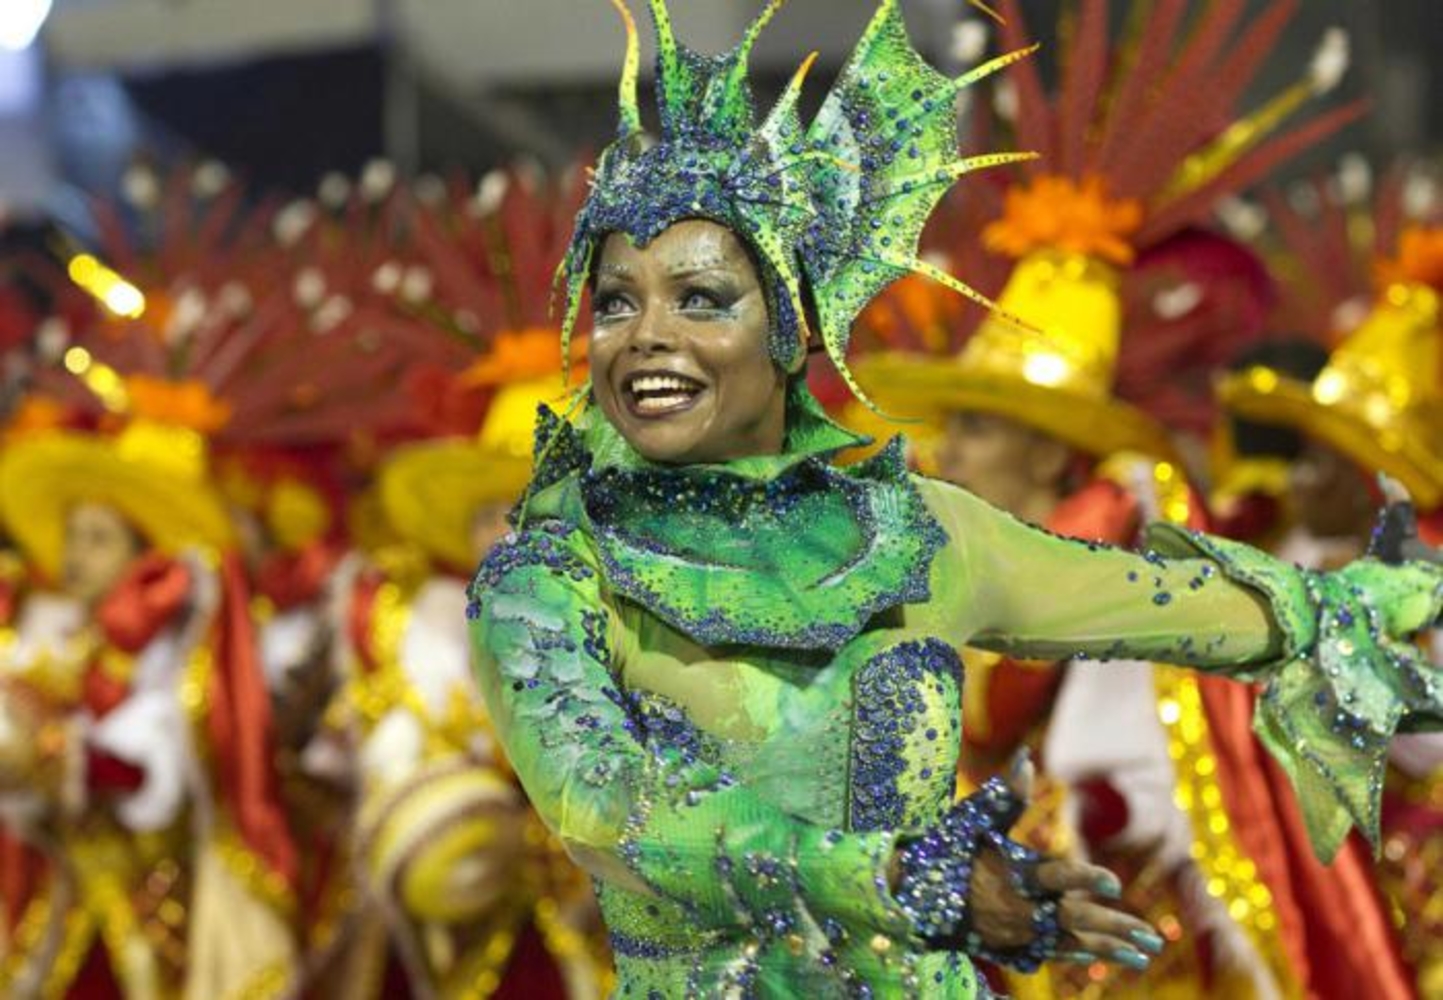 Carnival. Бразильский карнавал 2011. Rio 2011 Carnival. Карнавал в Рио люди. Изабелита Бразилия.